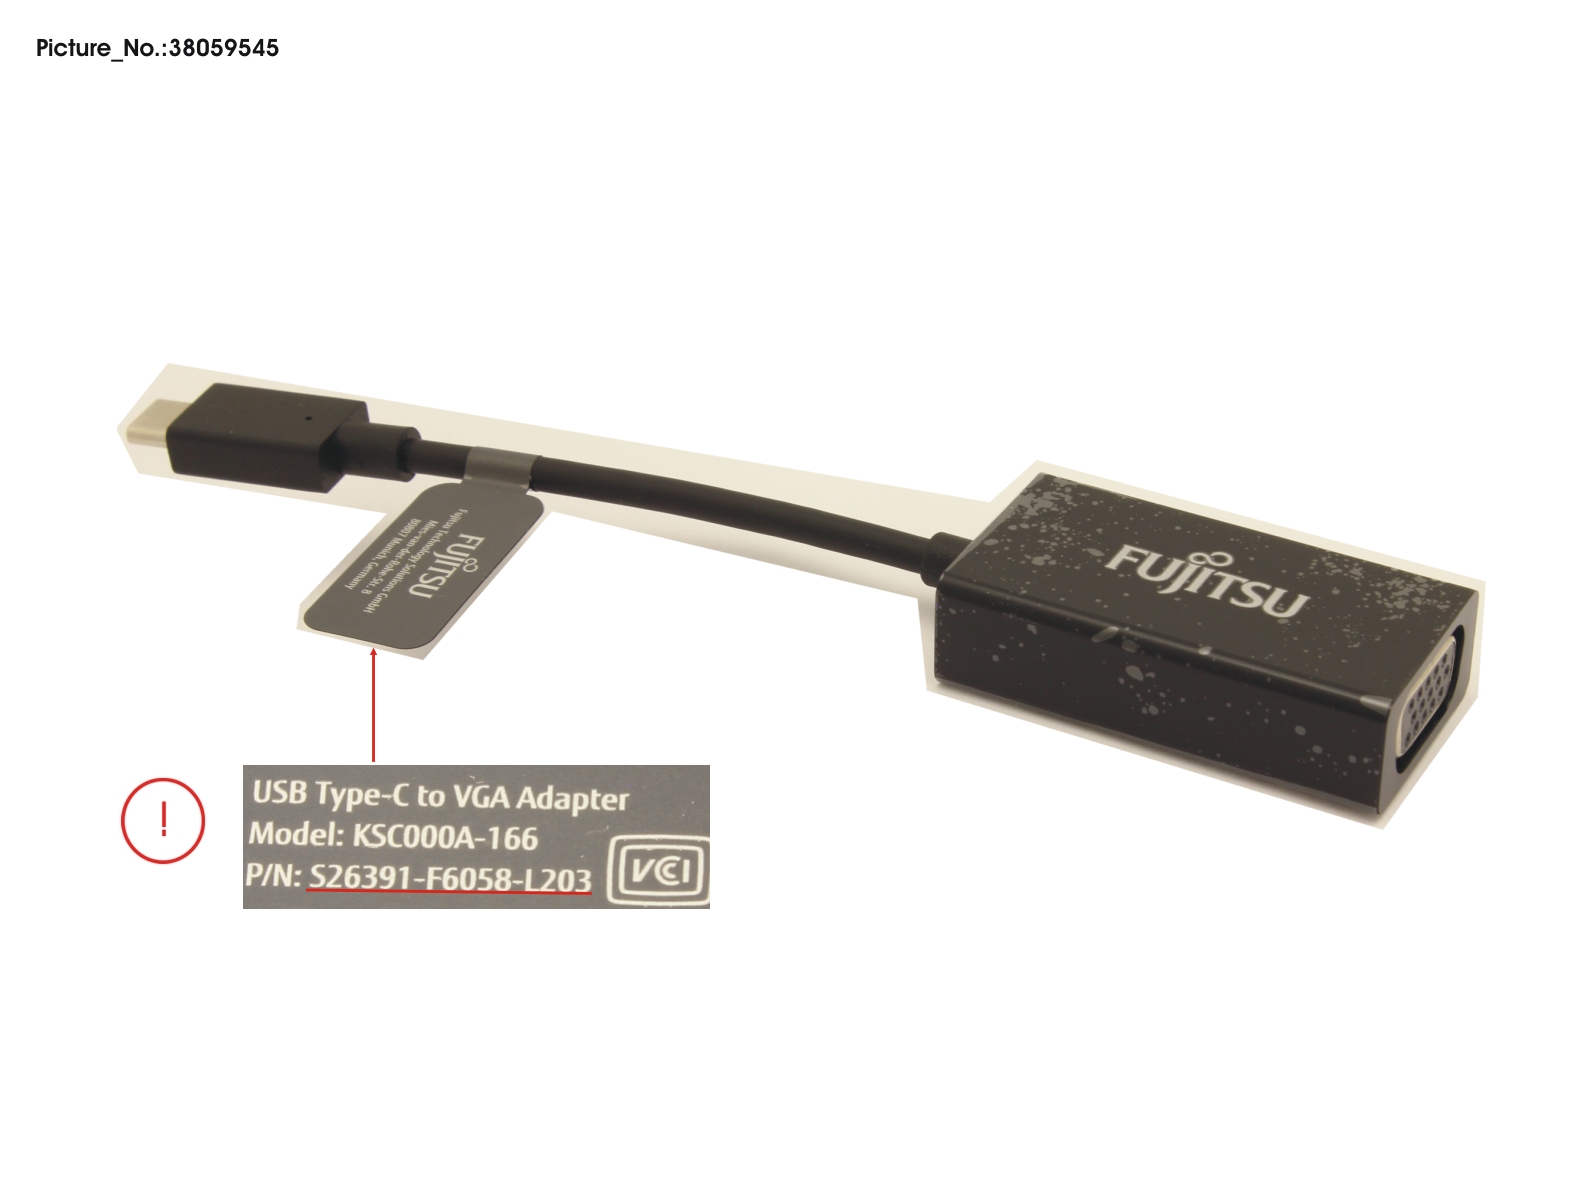 USB TYPE-C TO VGA ADAPTER